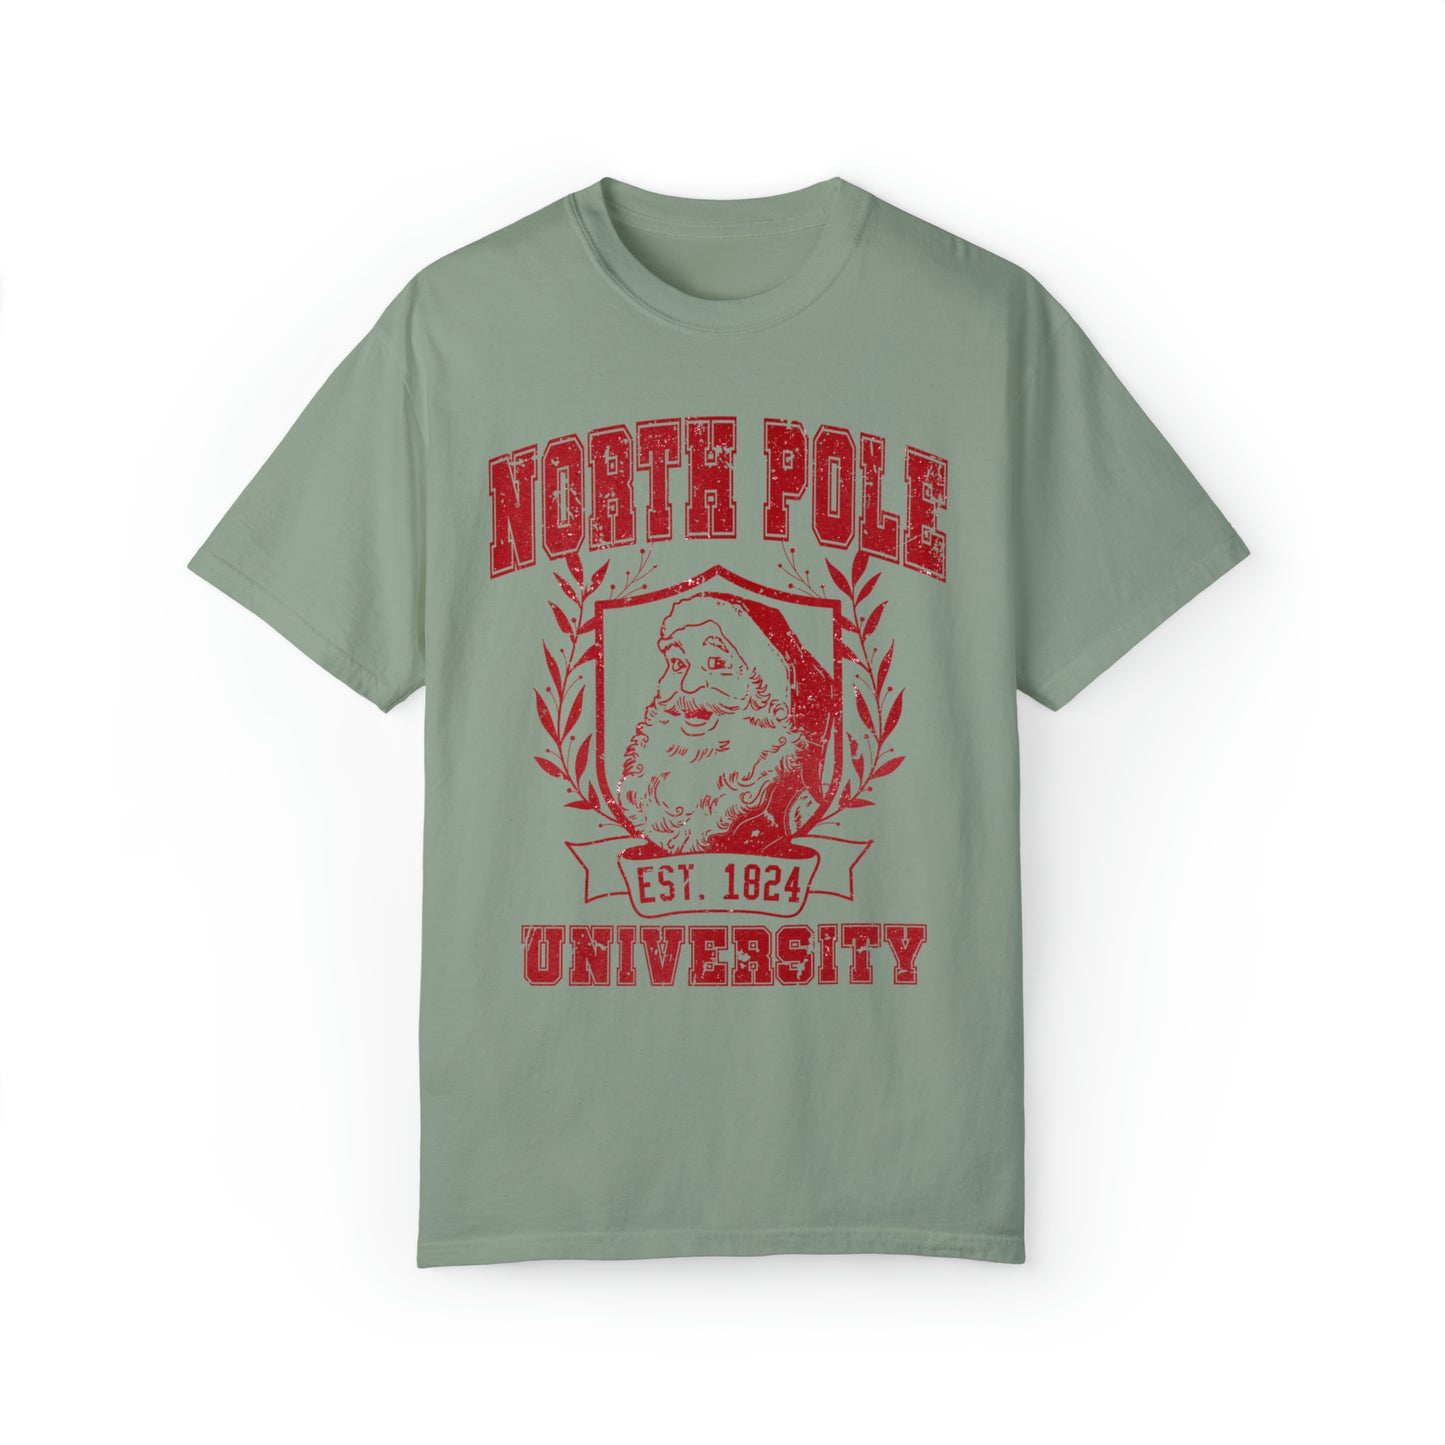 North Pole University Shirt